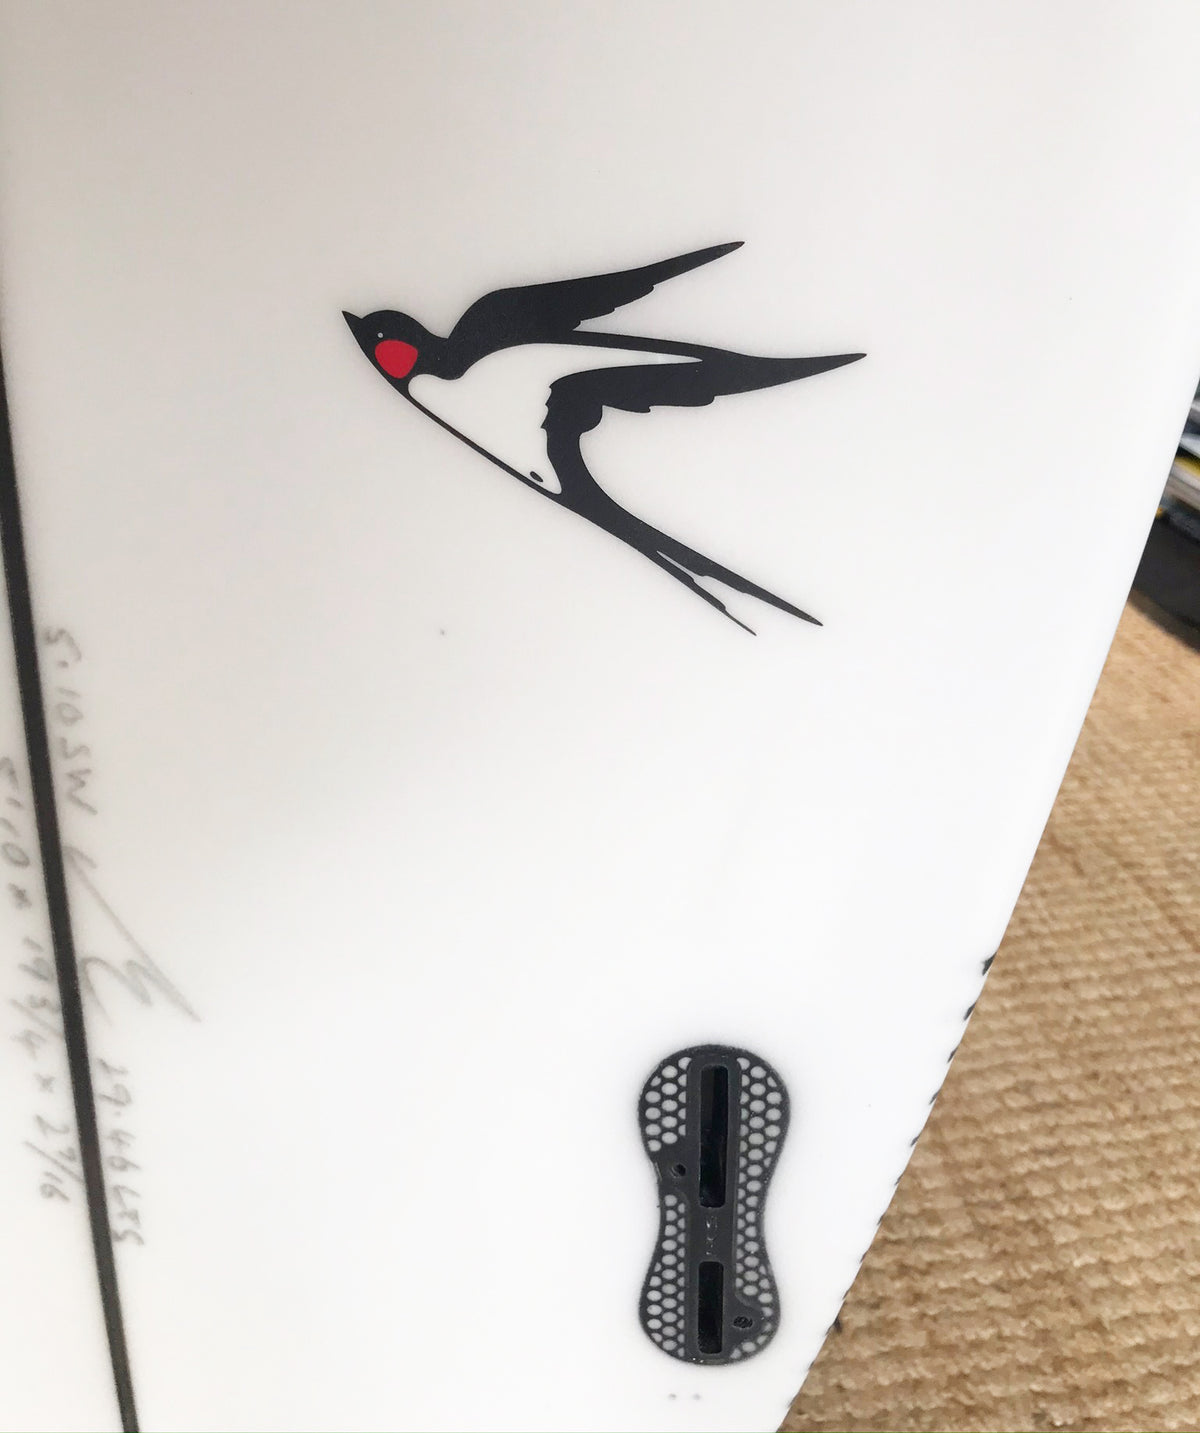 Swallow Performance Surfboard